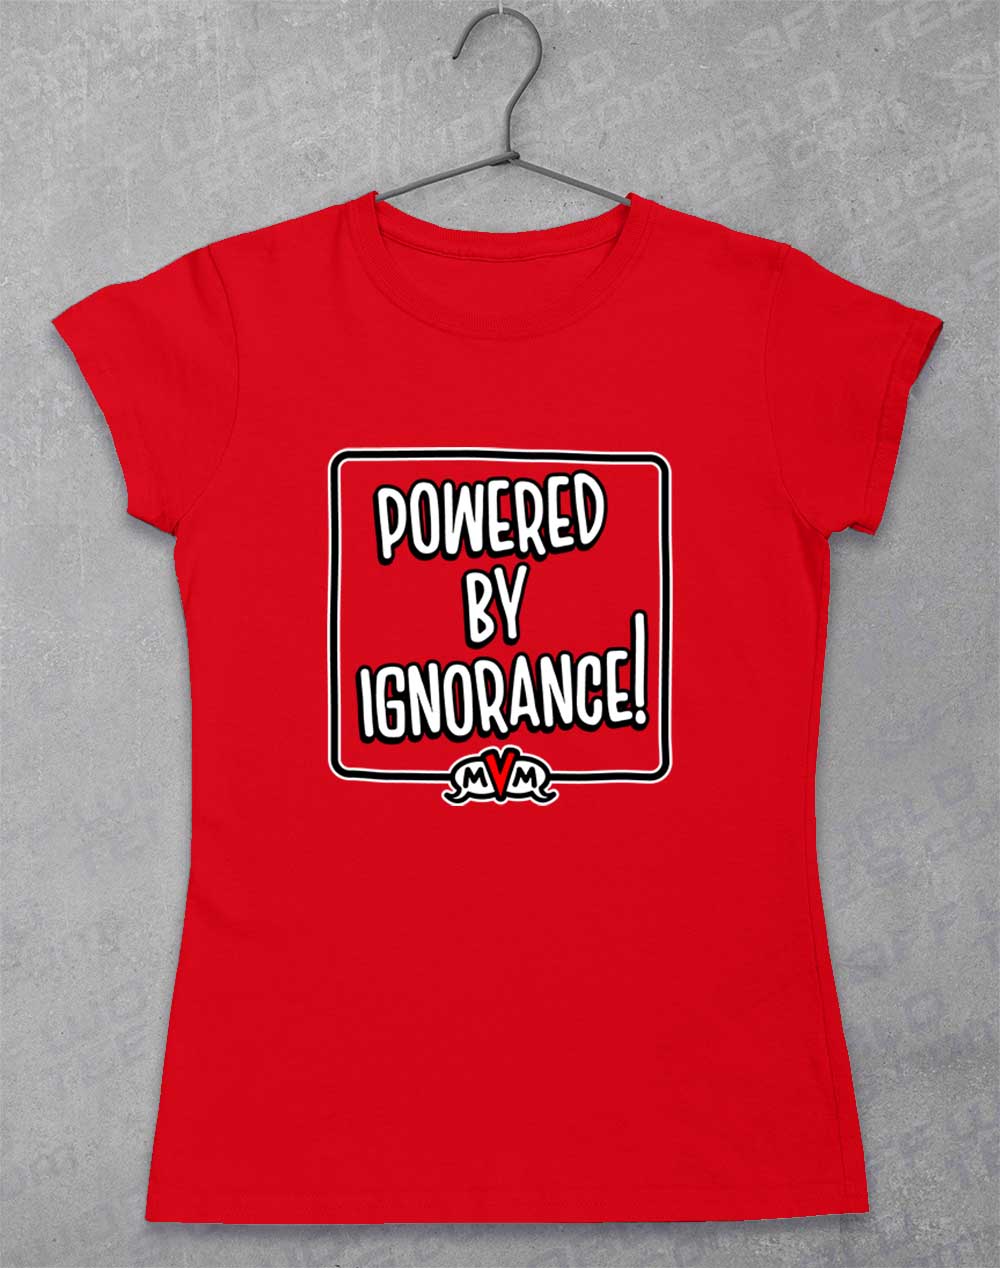 Red - MvM Powered by Ignorance Women's T-Shirt